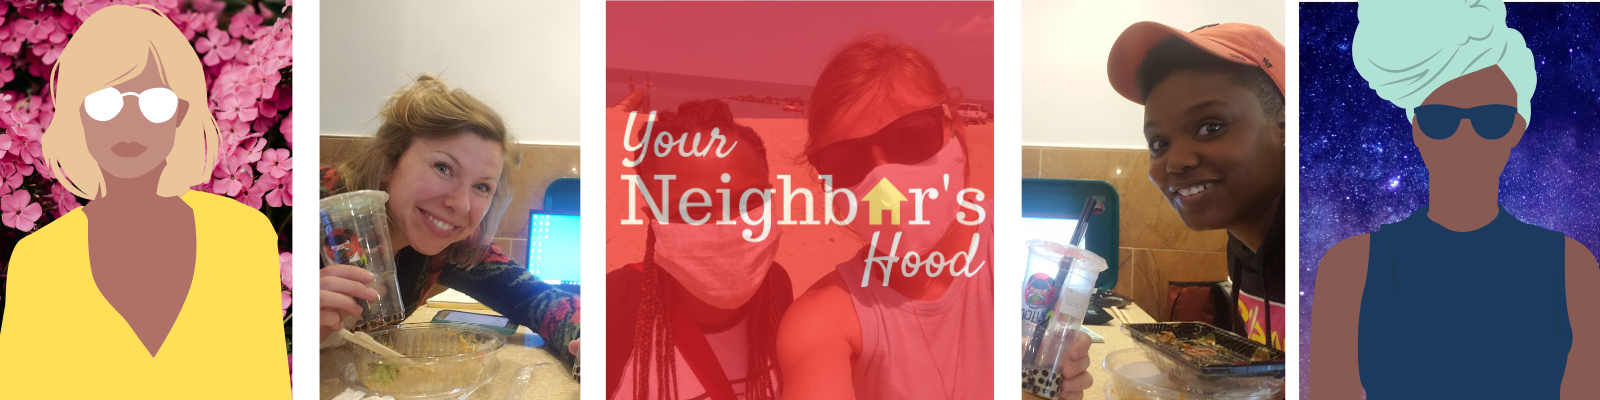 Your Neighbor's Hood Podcast